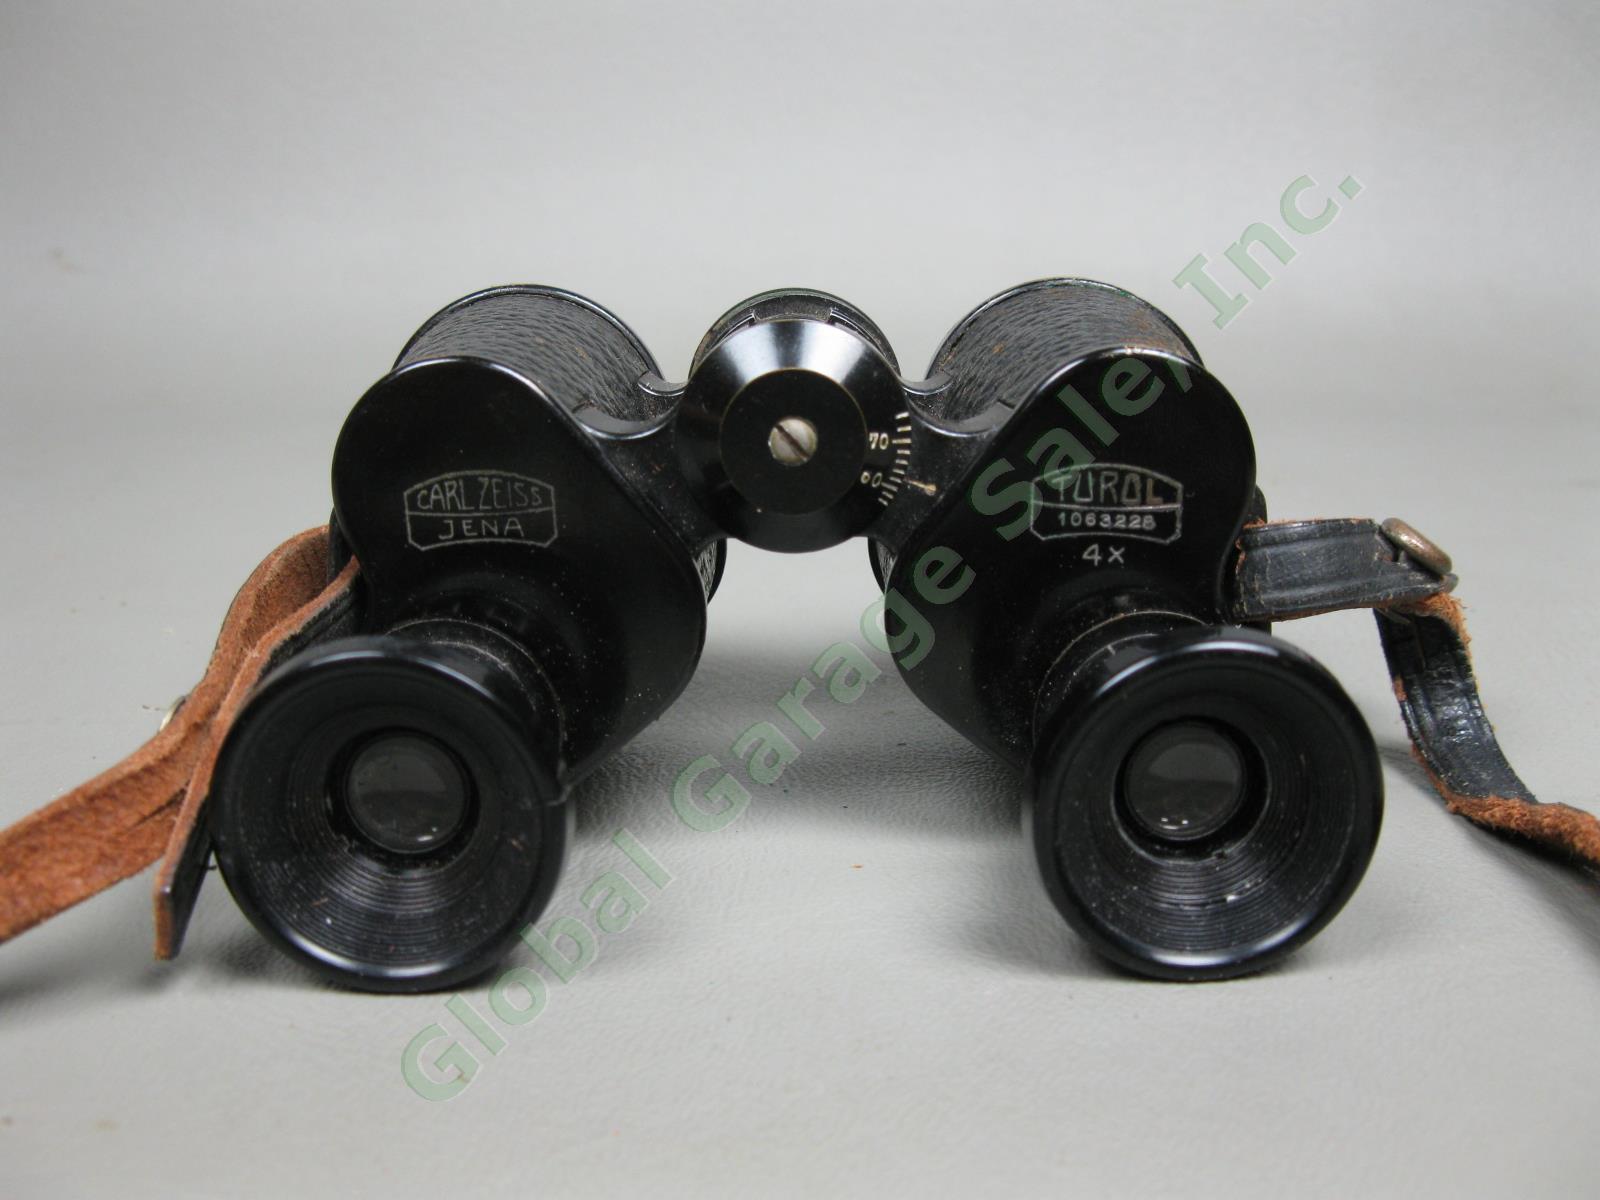 Vintage Carl Zeiss Jena Turol 4x Compact Binoculars w/ Leather Case #1063228 NR 3